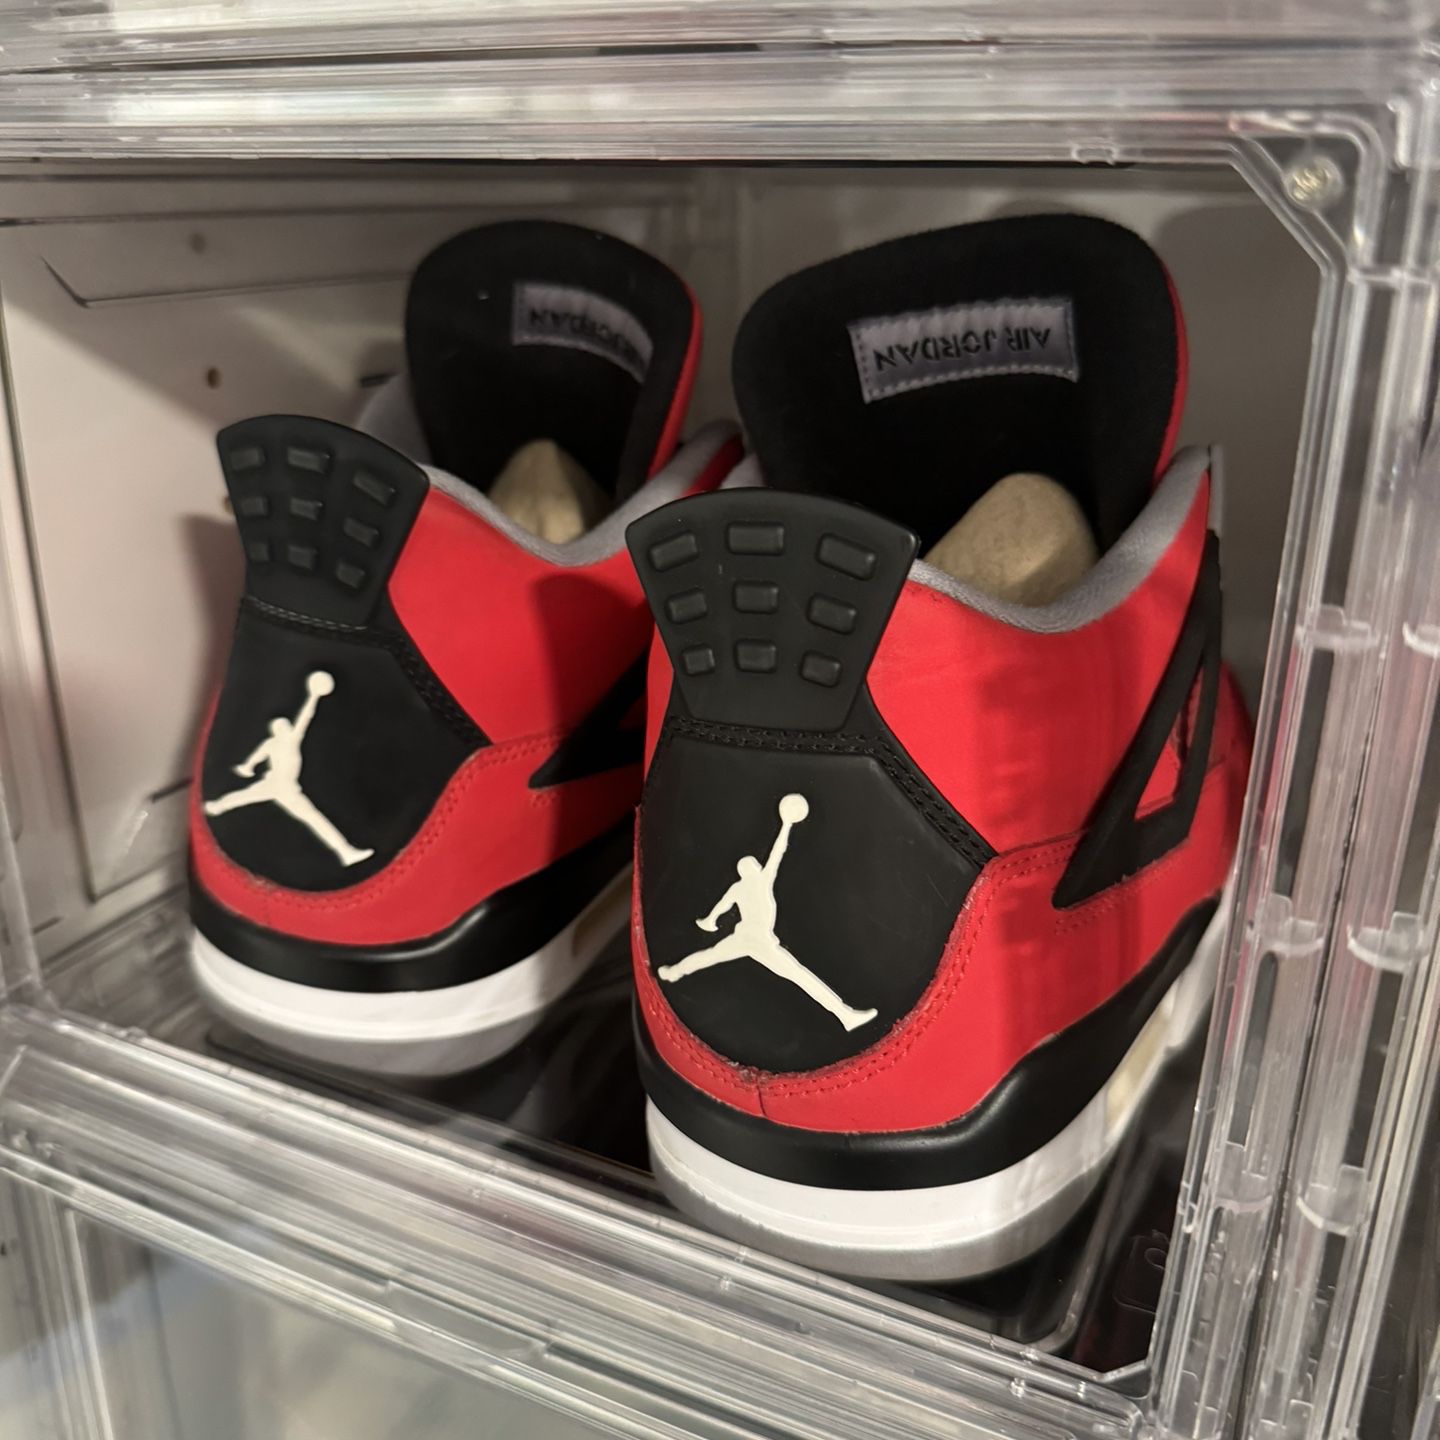 -Nike Air Jordans (Size 10 men’s U.S.) 3 Pairs Total